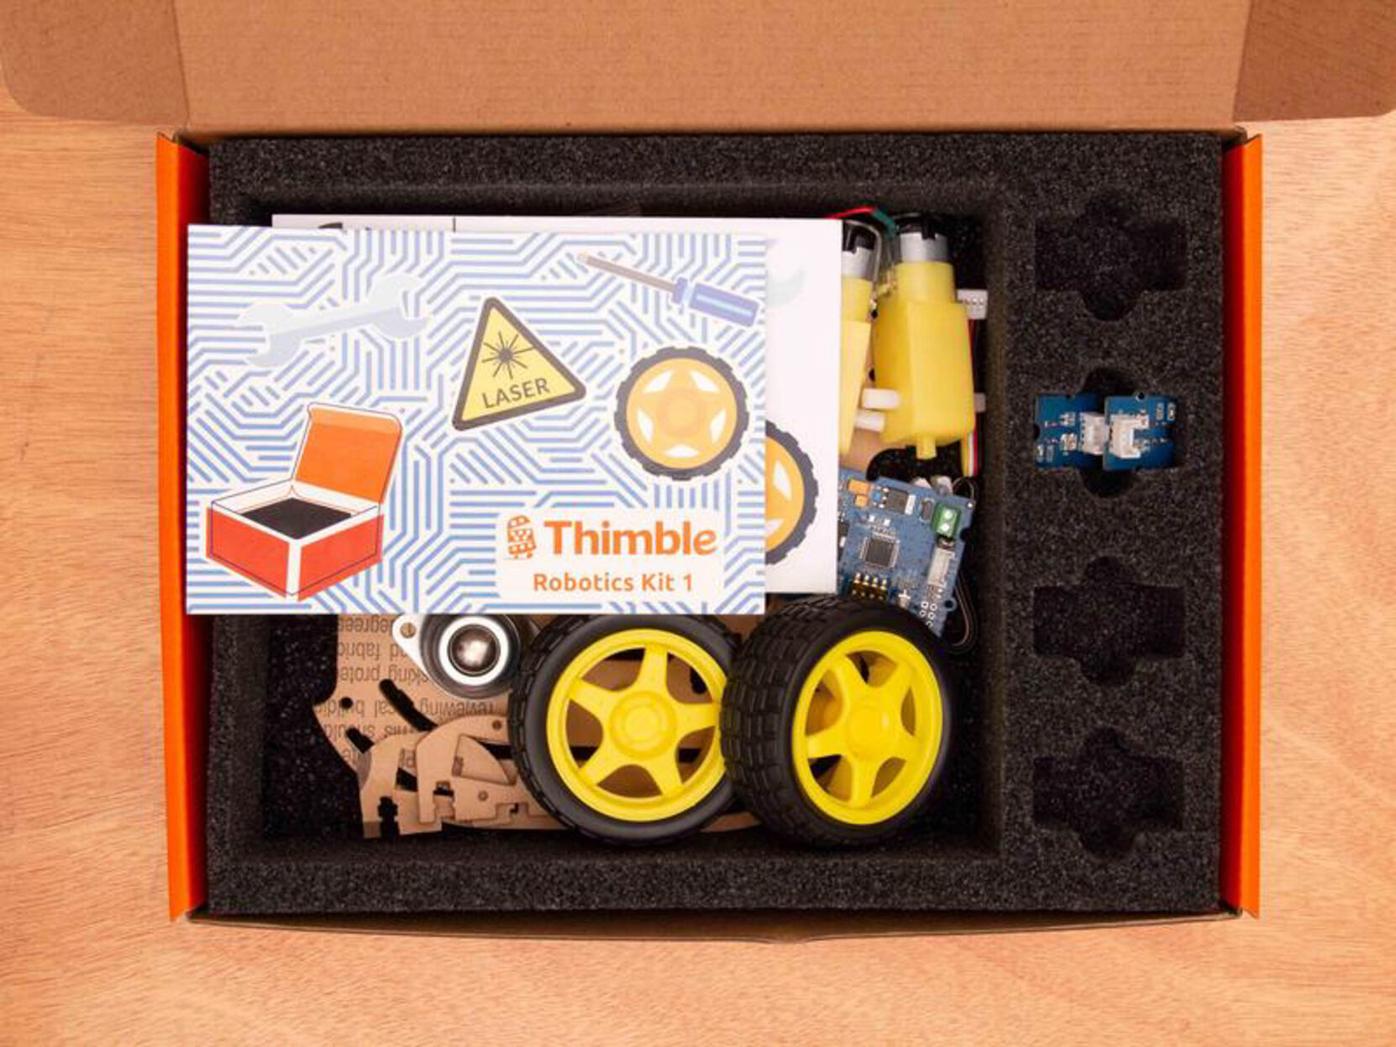 Thimble Wifi enabled Robot Kit